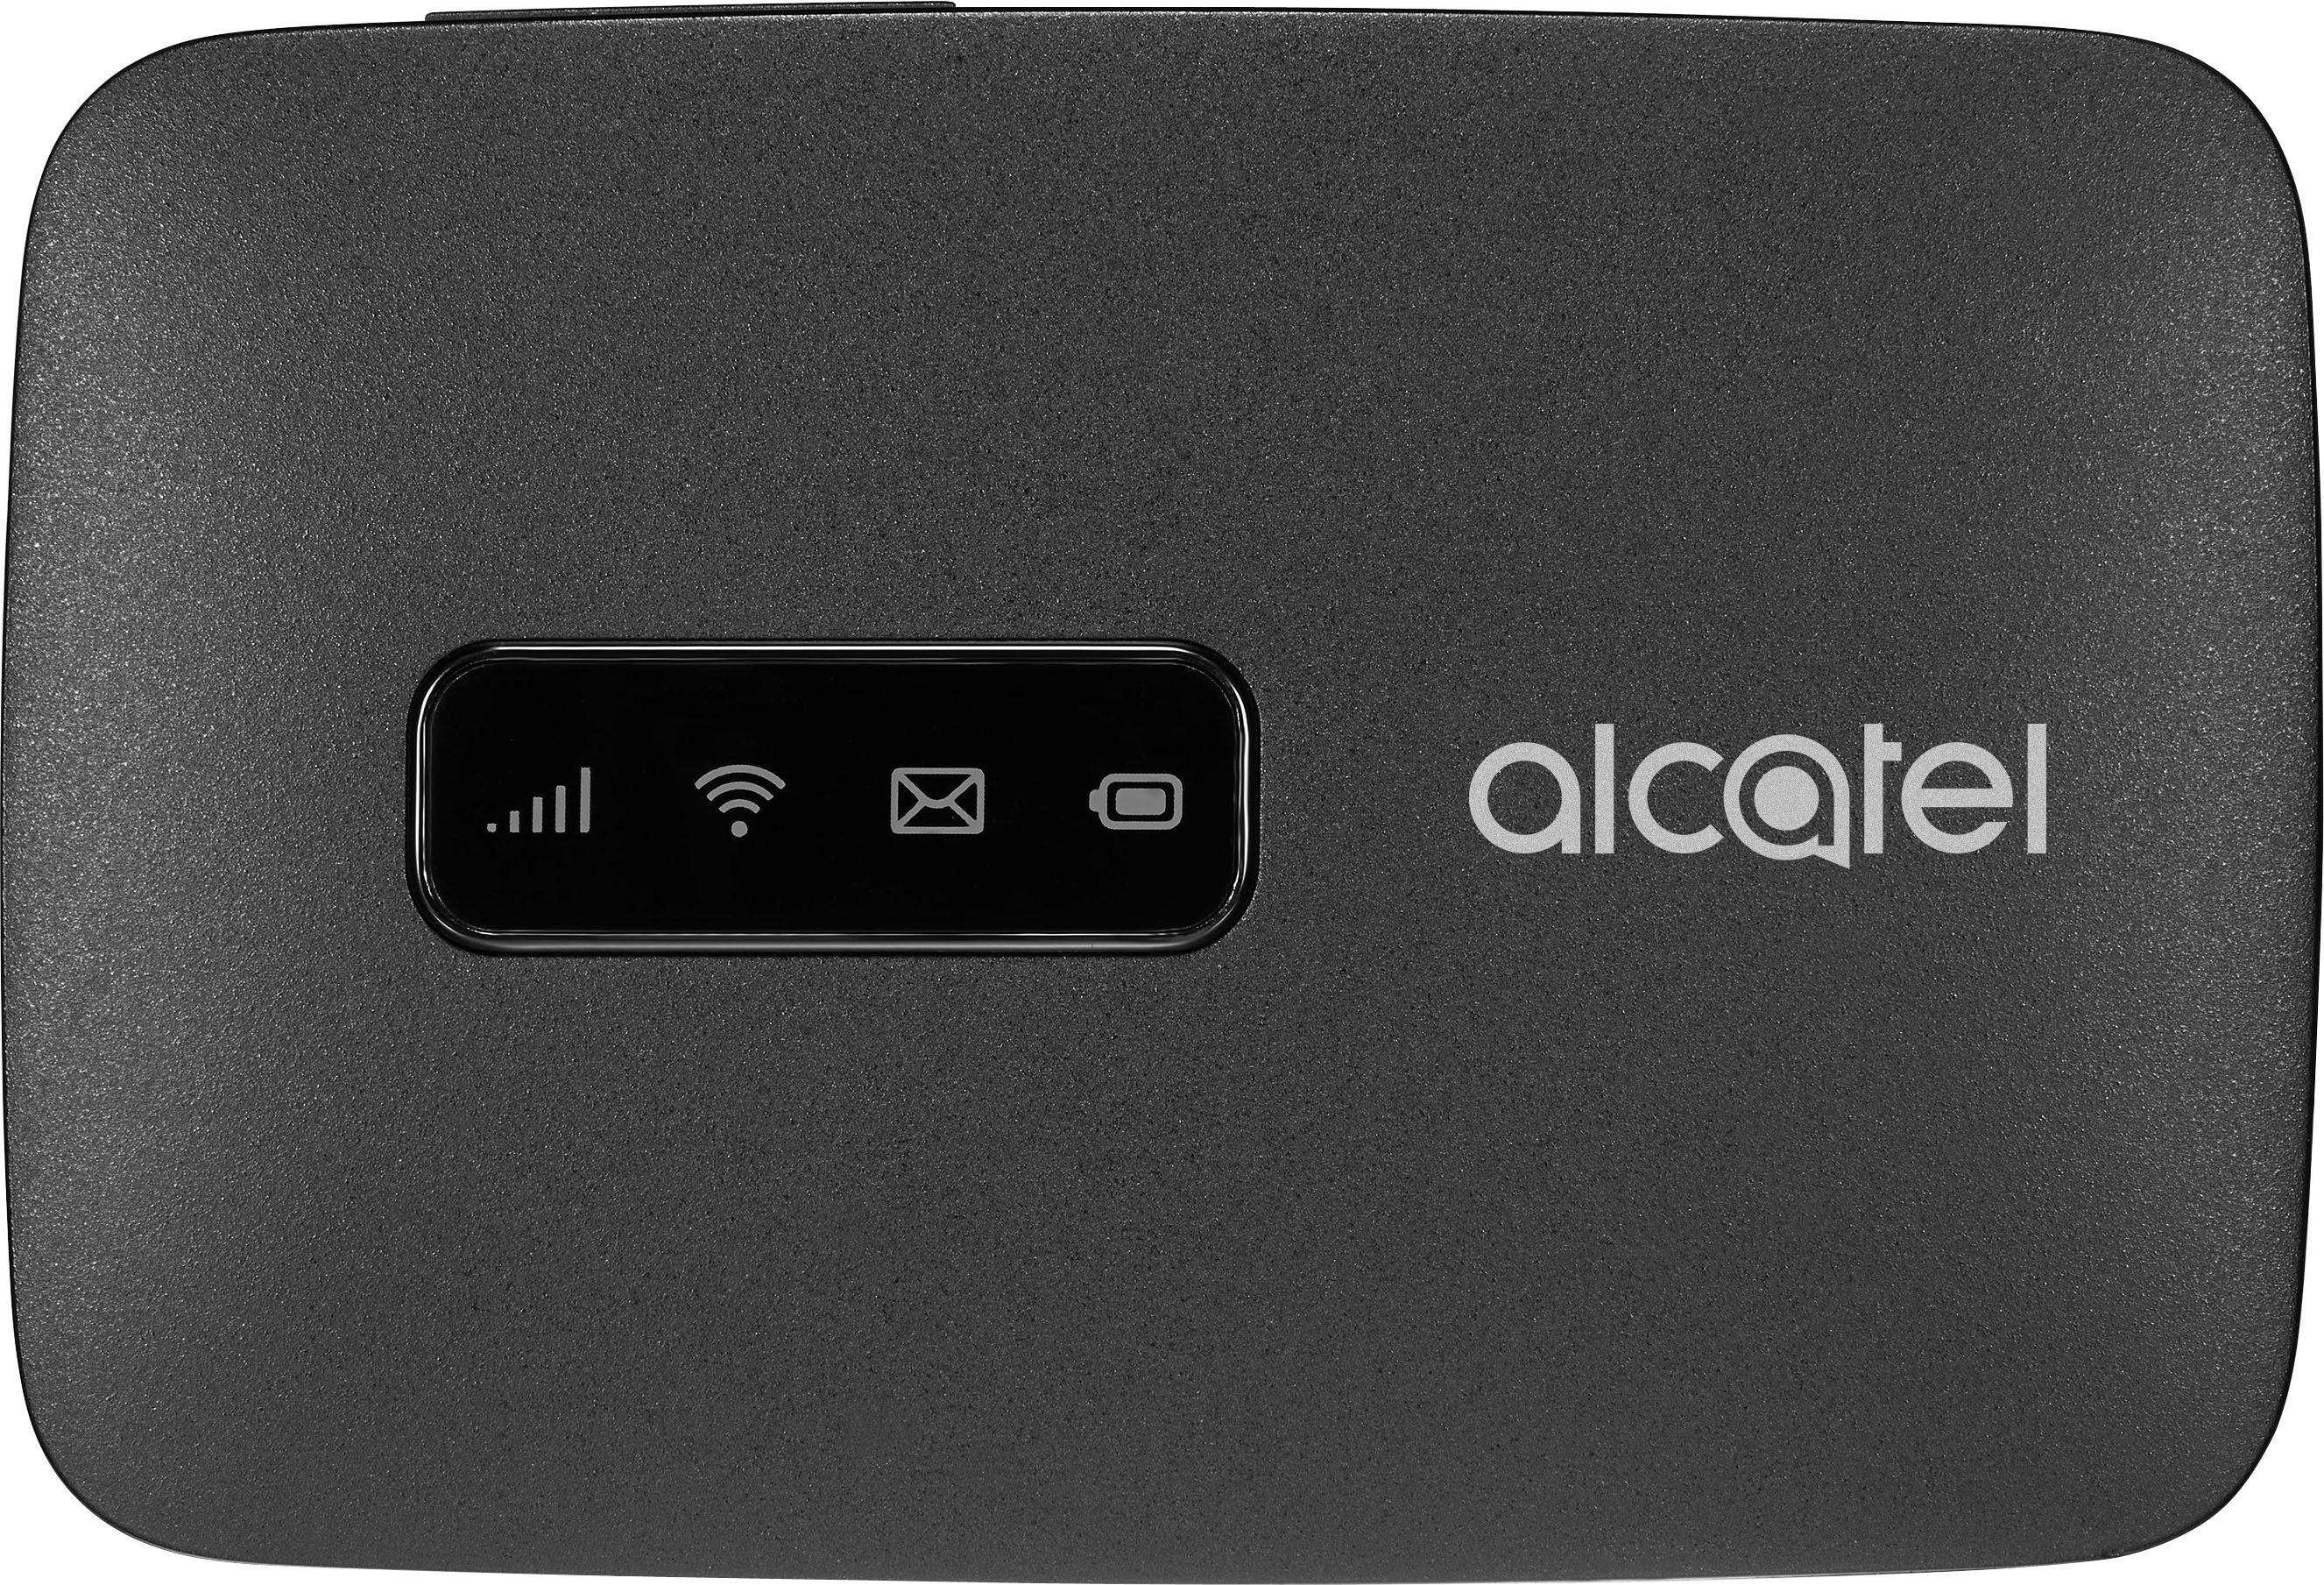 Alcatel »MW40V LINKZONE« WLAN-Router, für mobiles Internet, Wifi Hotspot,  schwarz